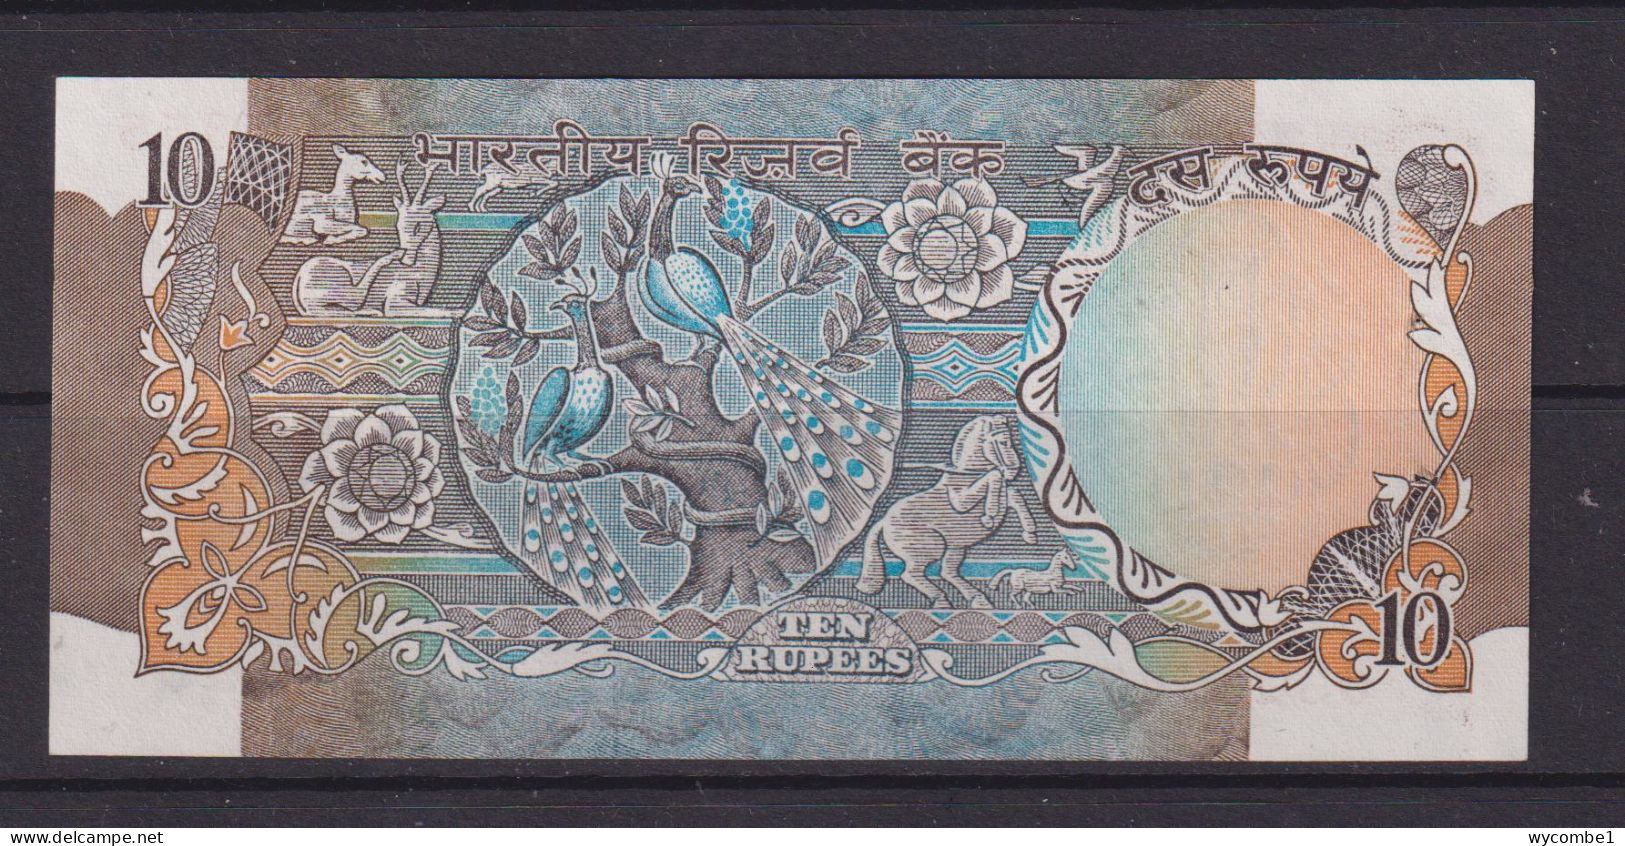 INDIA -  1970-90 10 Rupees UNC/aUNC  Banknote (Pin Holes) - Inde